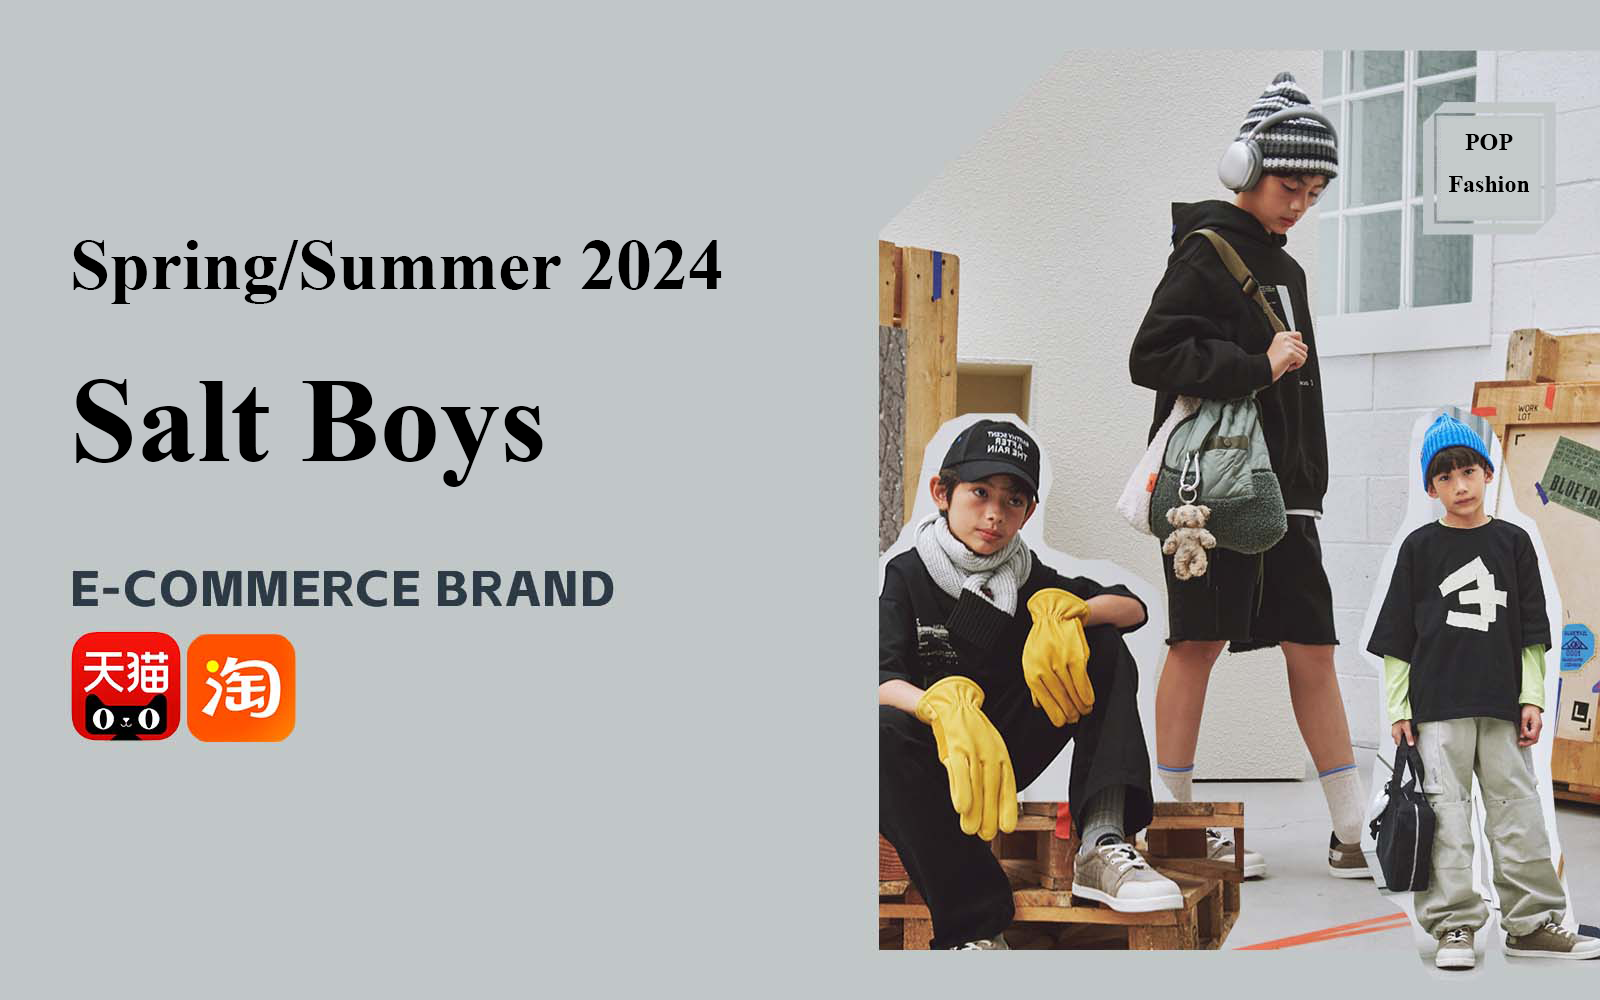 Salt Boys -- The Comprehensive Analysis of Boyswear E-Commerce